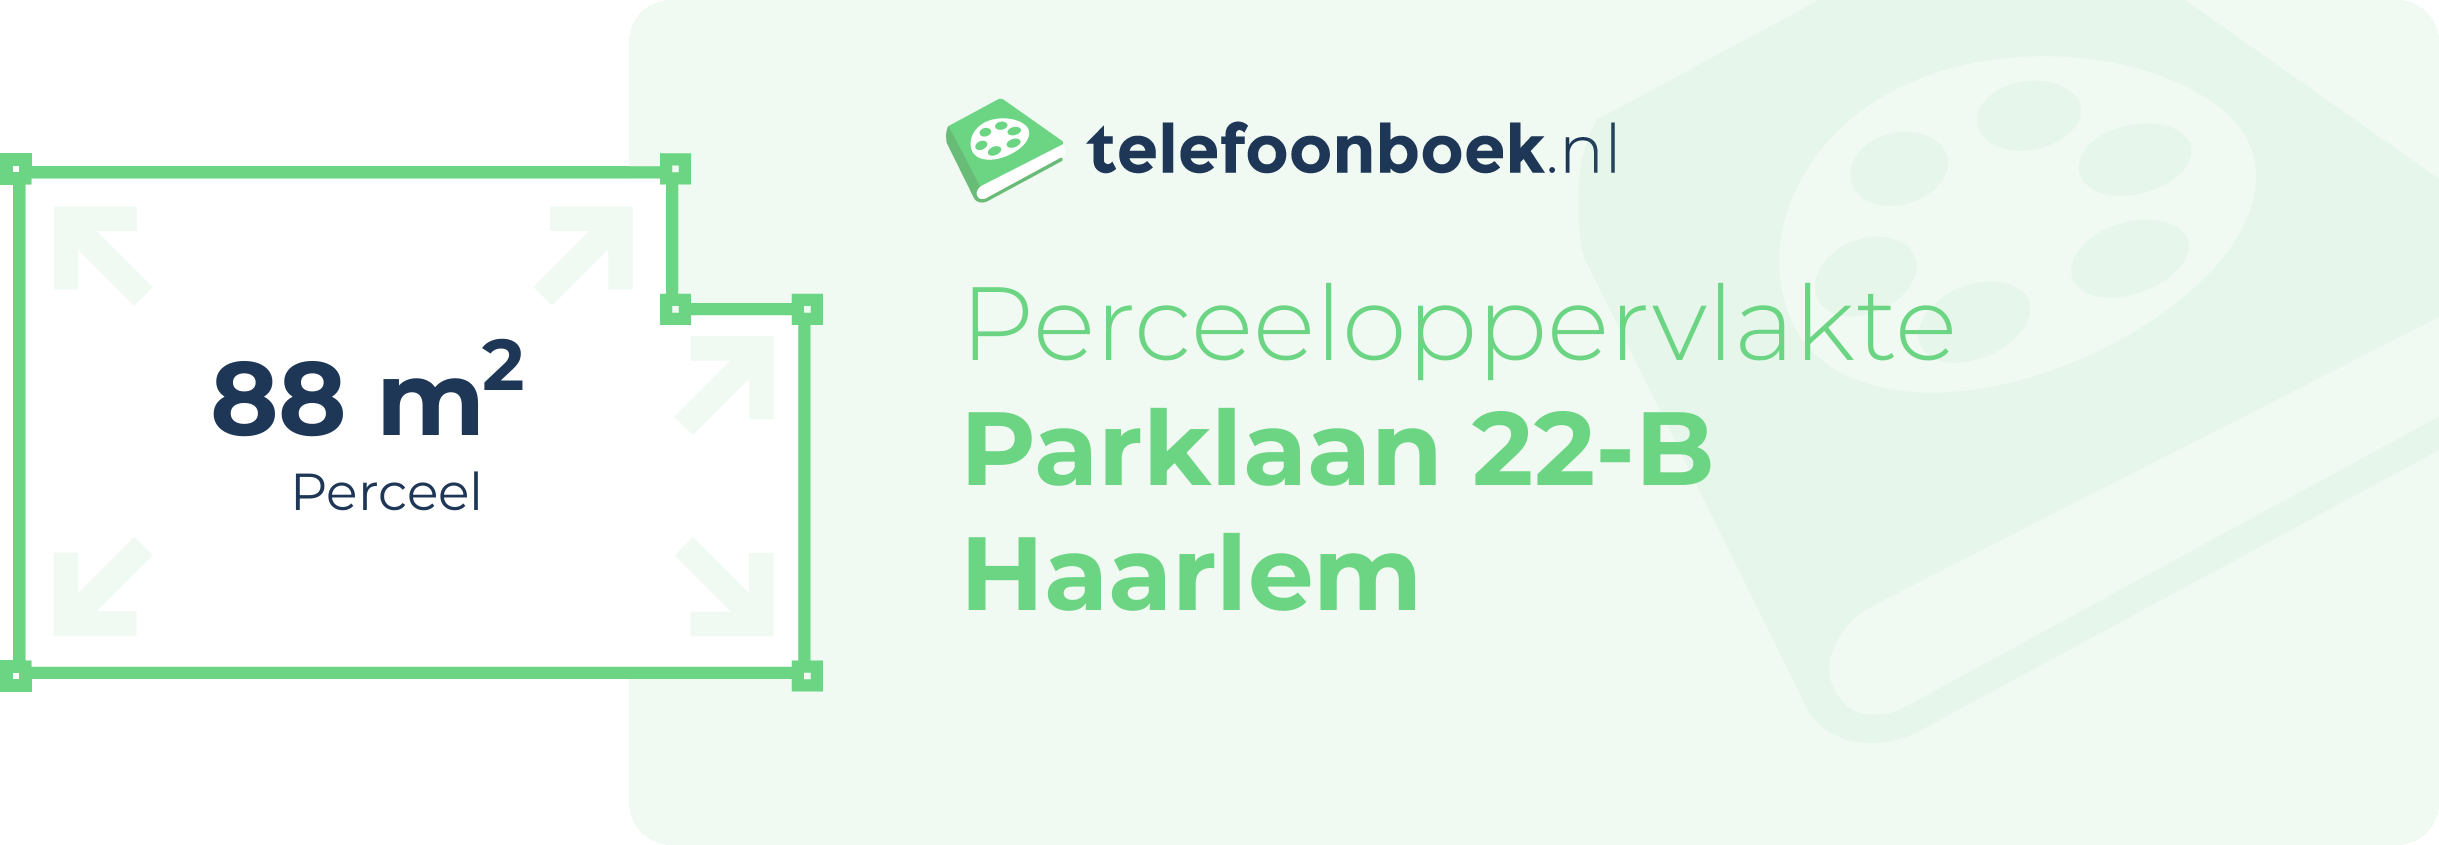 Perceeloppervlakte Parklaan 22-B Haarlem